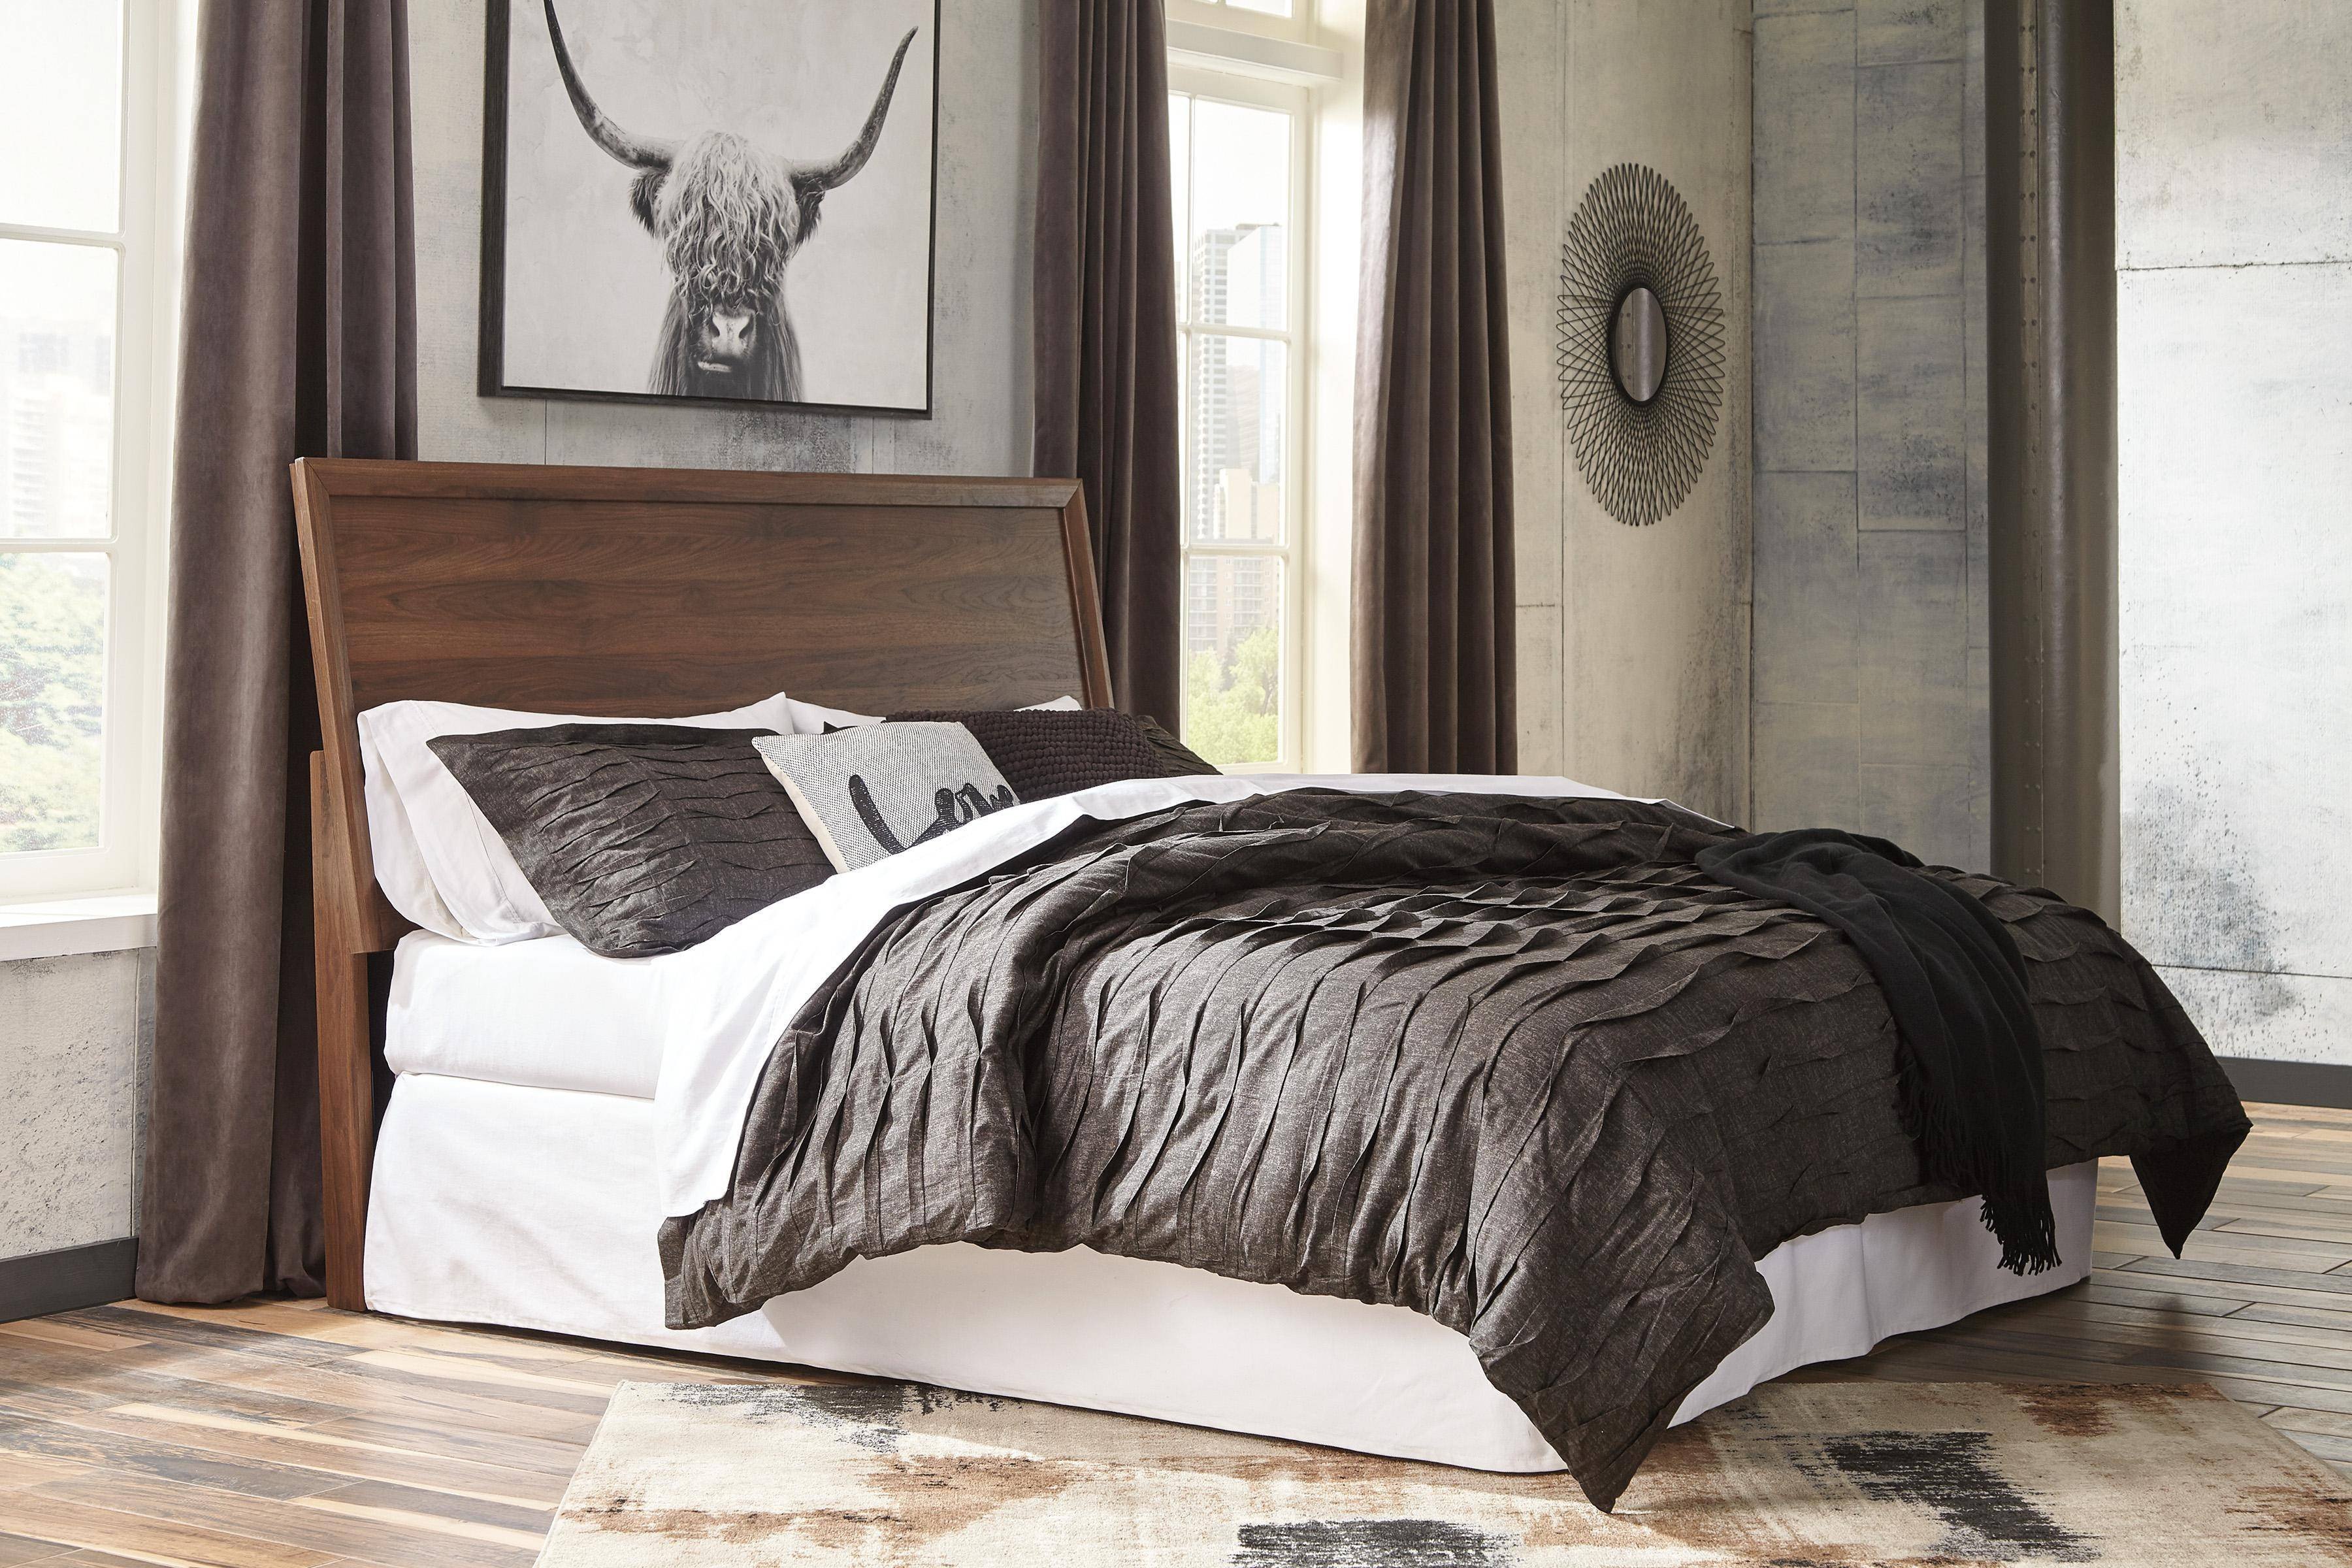 Grey and Tan Bedroom Best Of ashley Daneston B292 King Size Panel Bedroom Set 6pcs In